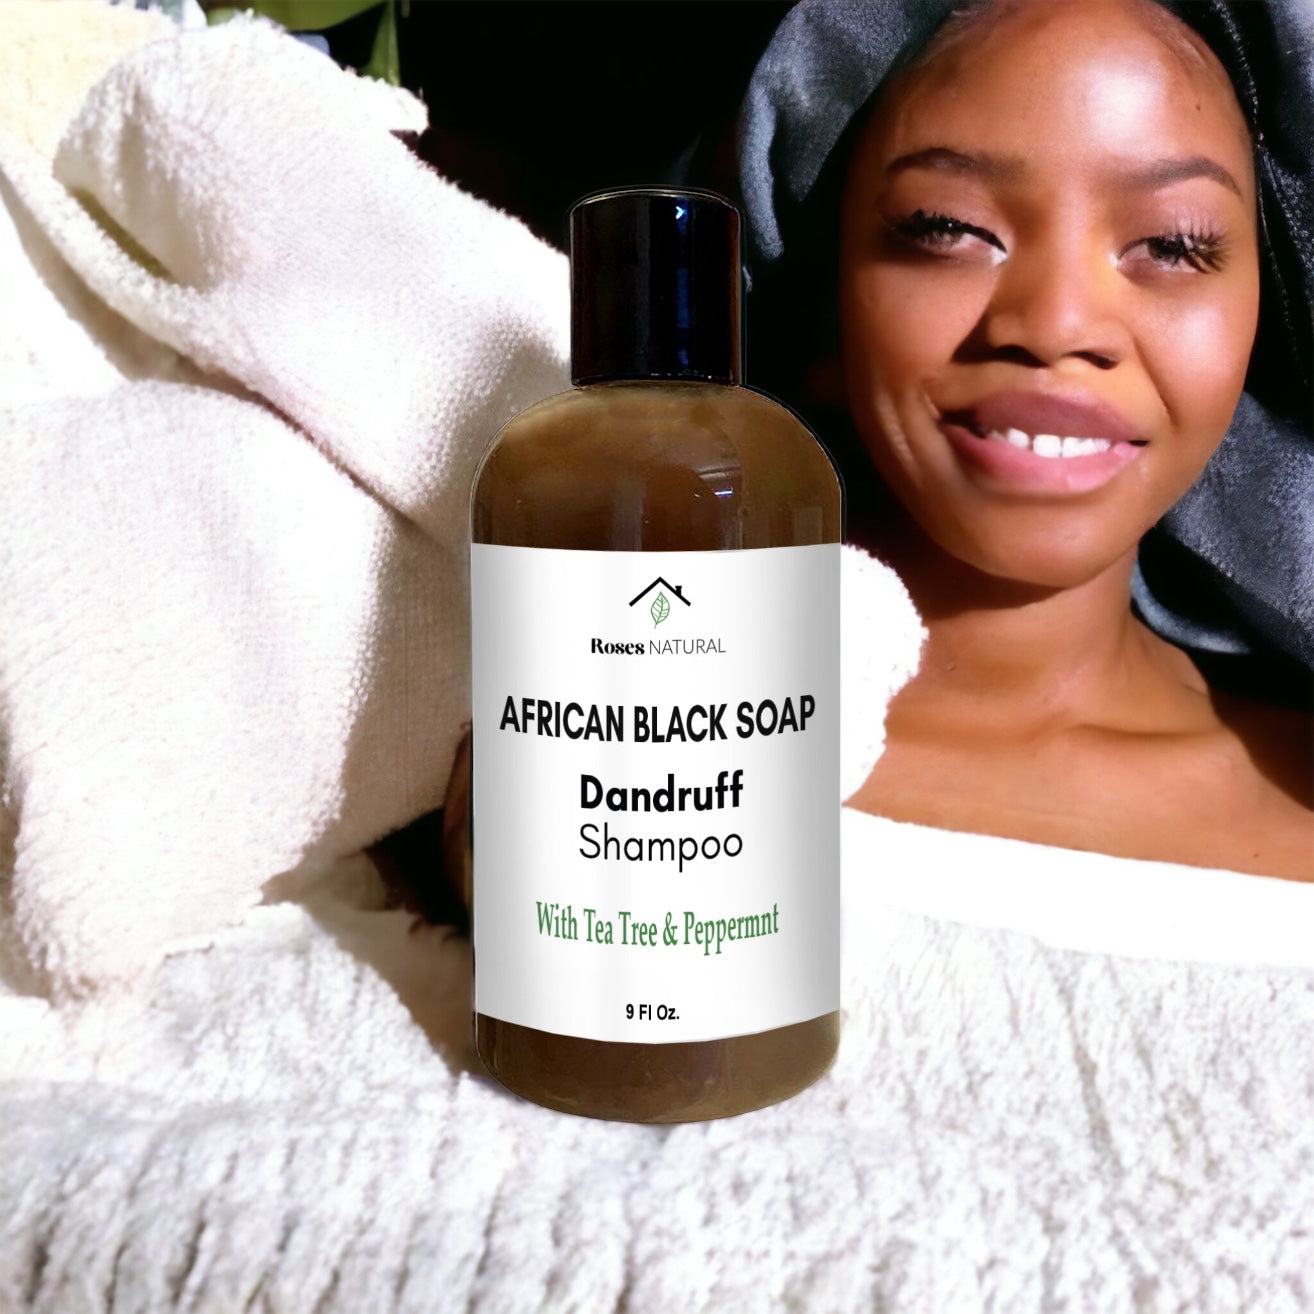 African Black Soap Dandruff Shampoo